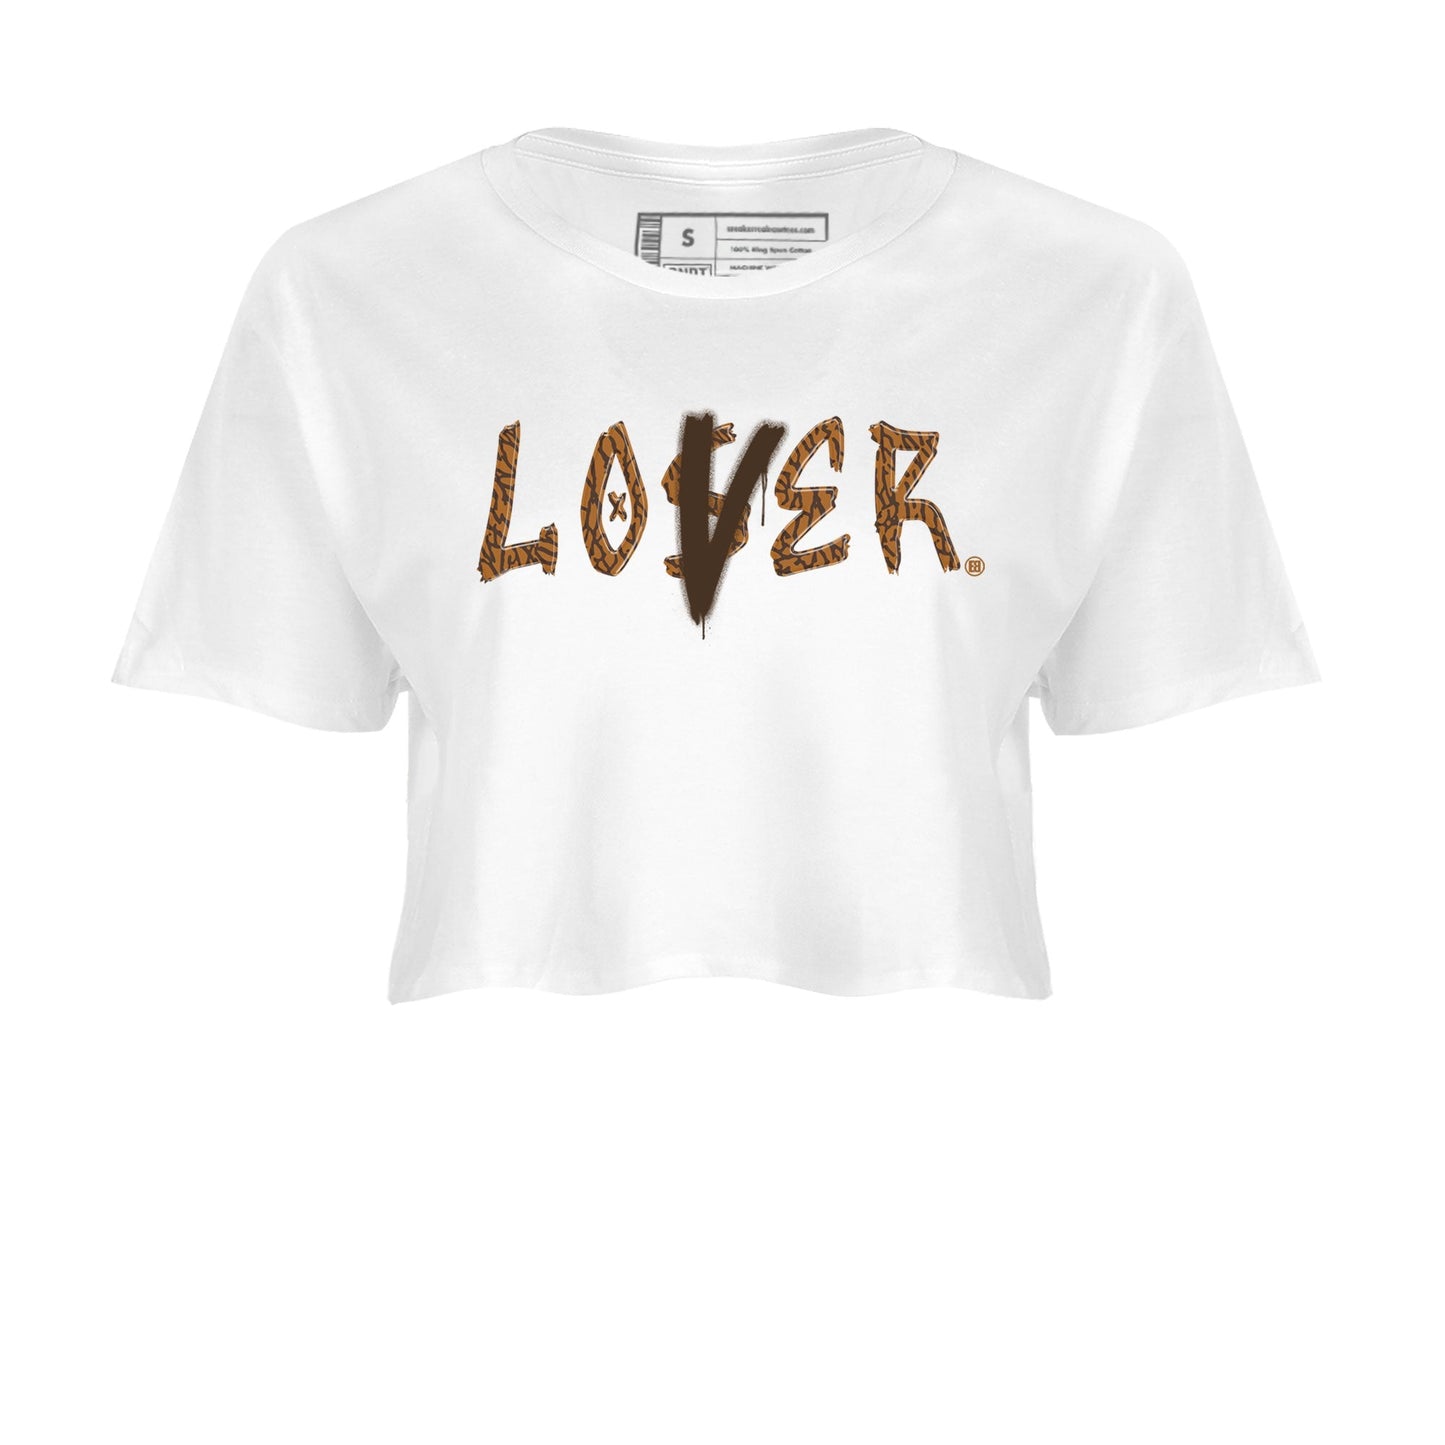 Air Jordan 3 Palomino shirt to match jordans Loser Lover Streetwear Sneaker Shirt Jordan 3 Retro Palomino Drip Gear Zone Sneaker Matching Clothing White 2 Crop T-Shirt